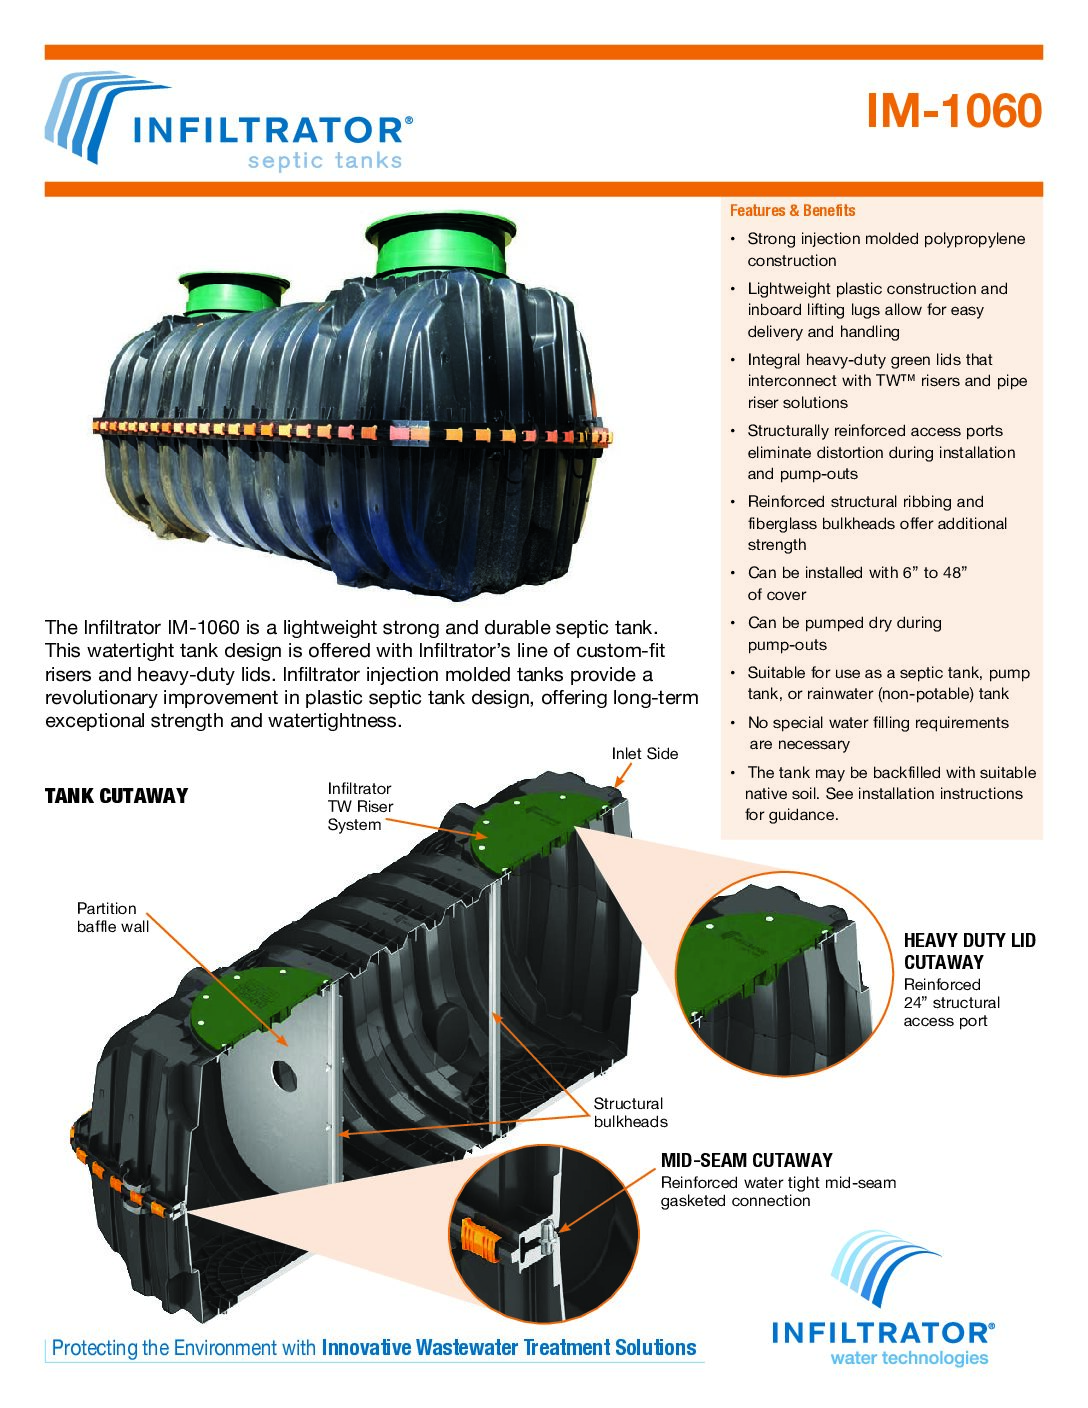 Infiltrator IM-1060 Plastic Septic Tank Information Sheet